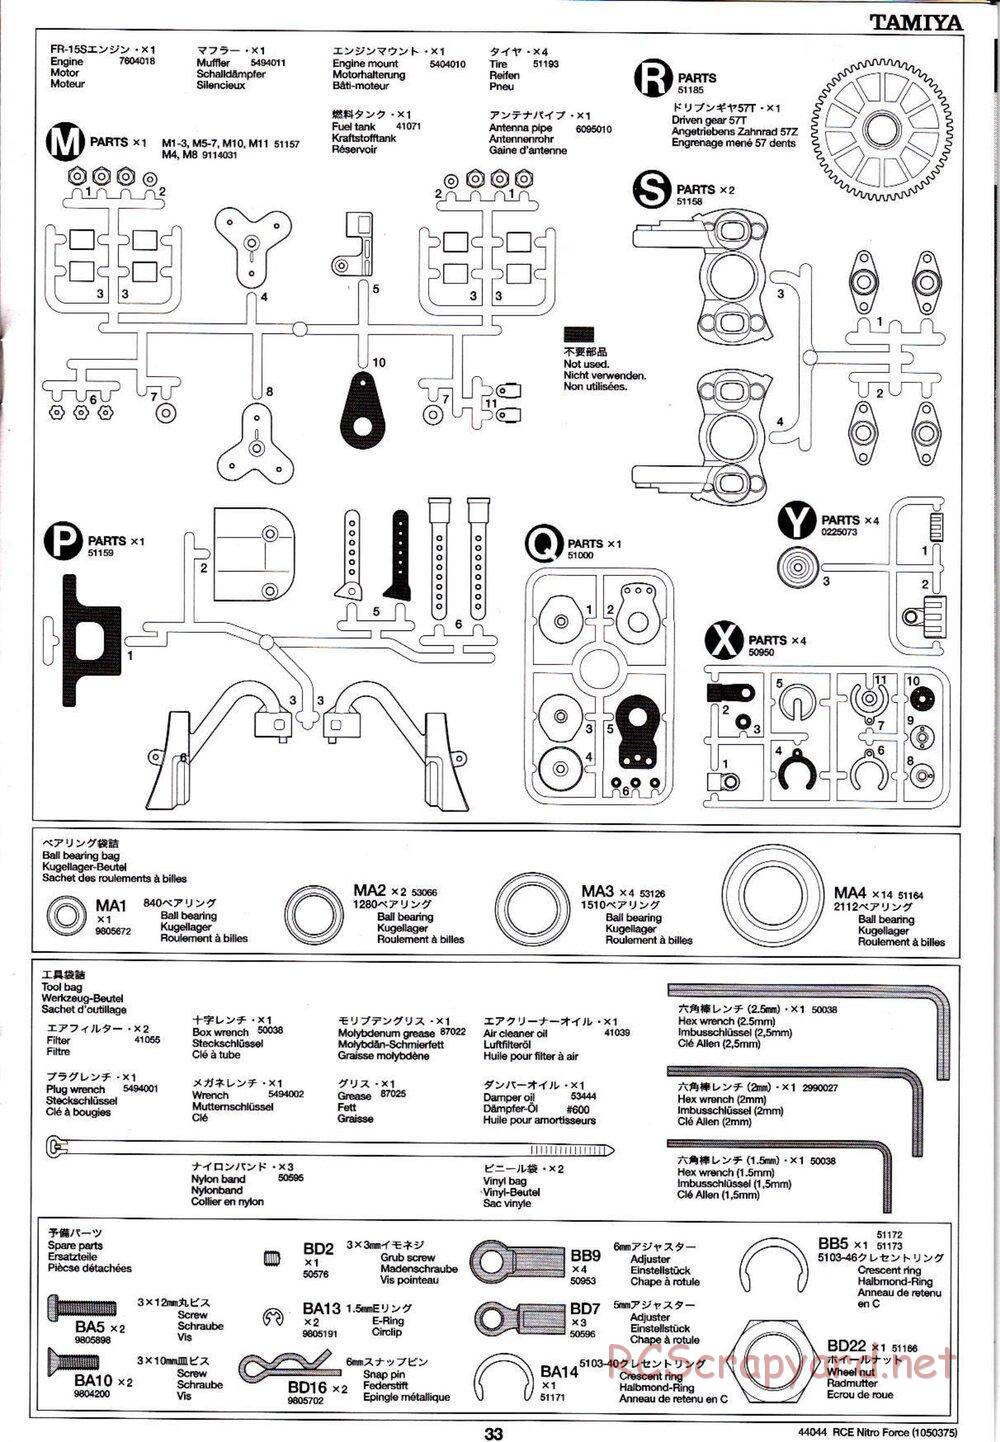 Tamiya - Nitro Force - NDF-01 Chassis - Manual - Page 33